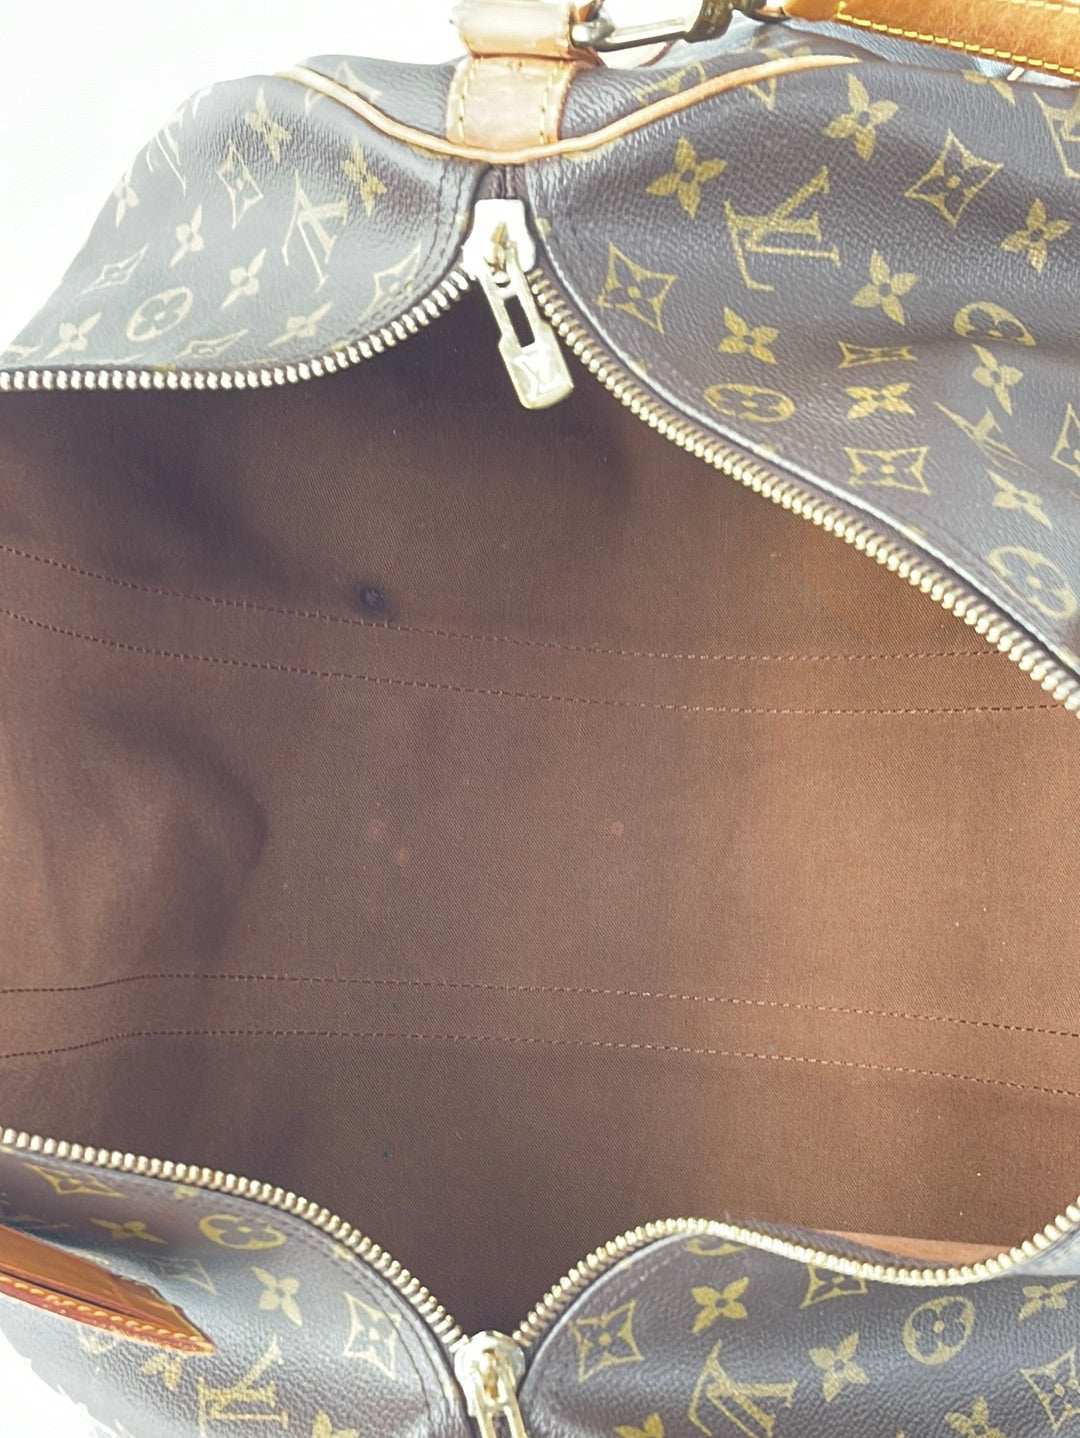 Louis Vuitton Vintage Keepall Bandoulire 45 Bag, $2,712